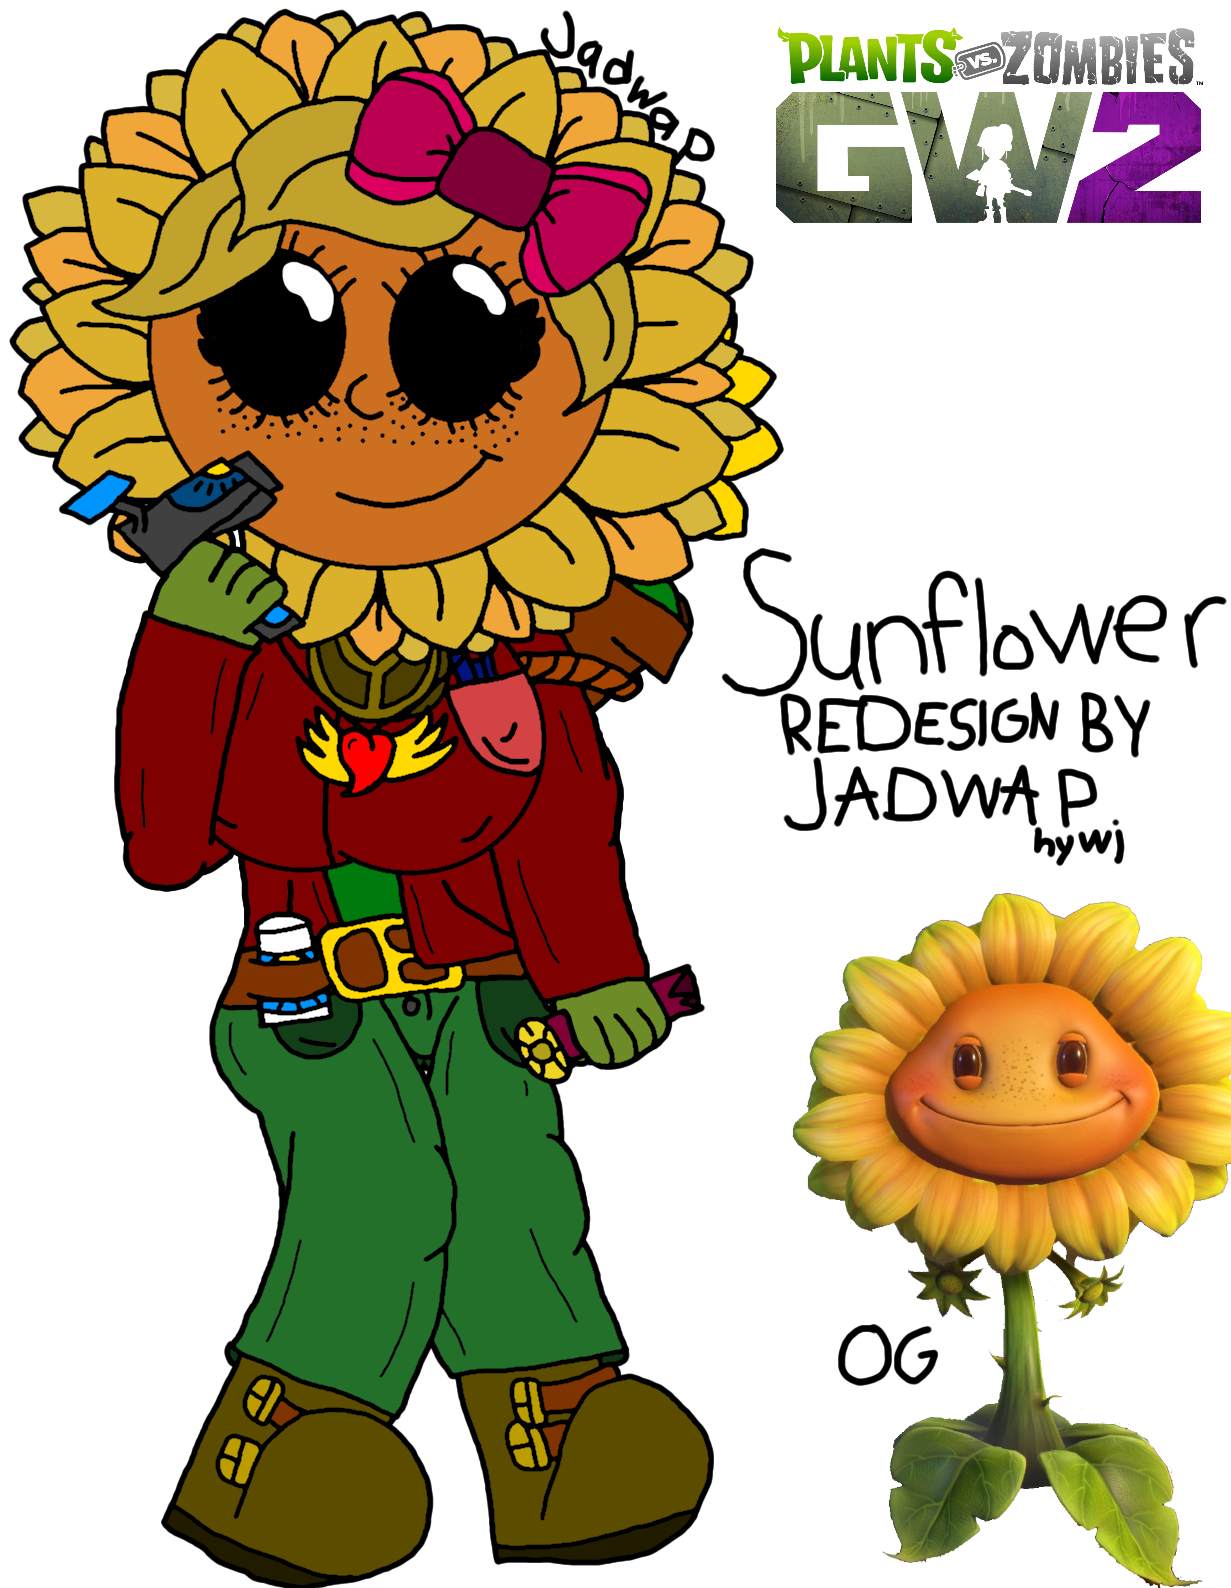 Plants vs Zombies 2 Sunflower(Costume) by illustation16 on DeviantArt